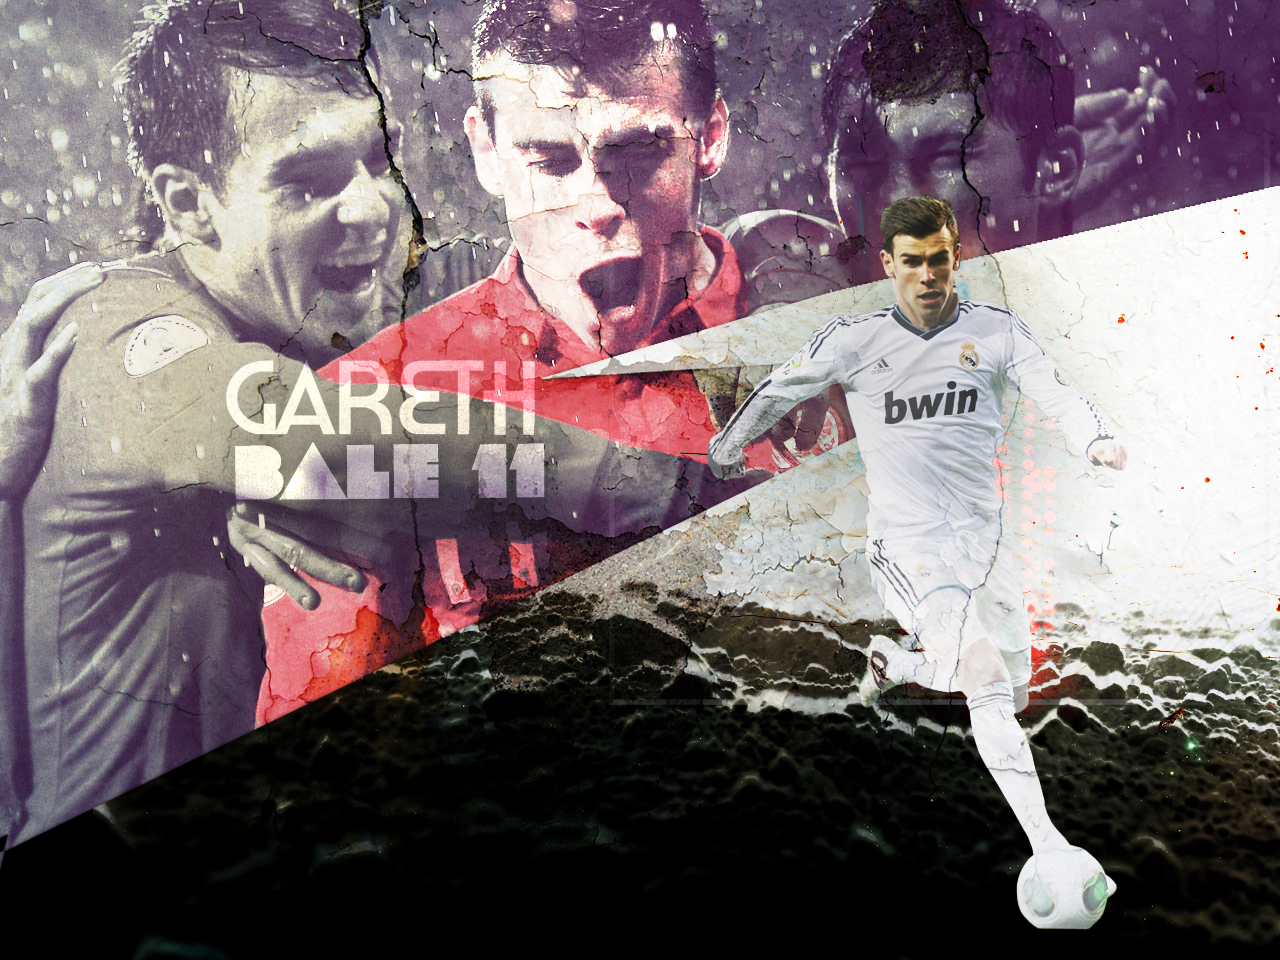 Gareth Bale HD Wallpaper